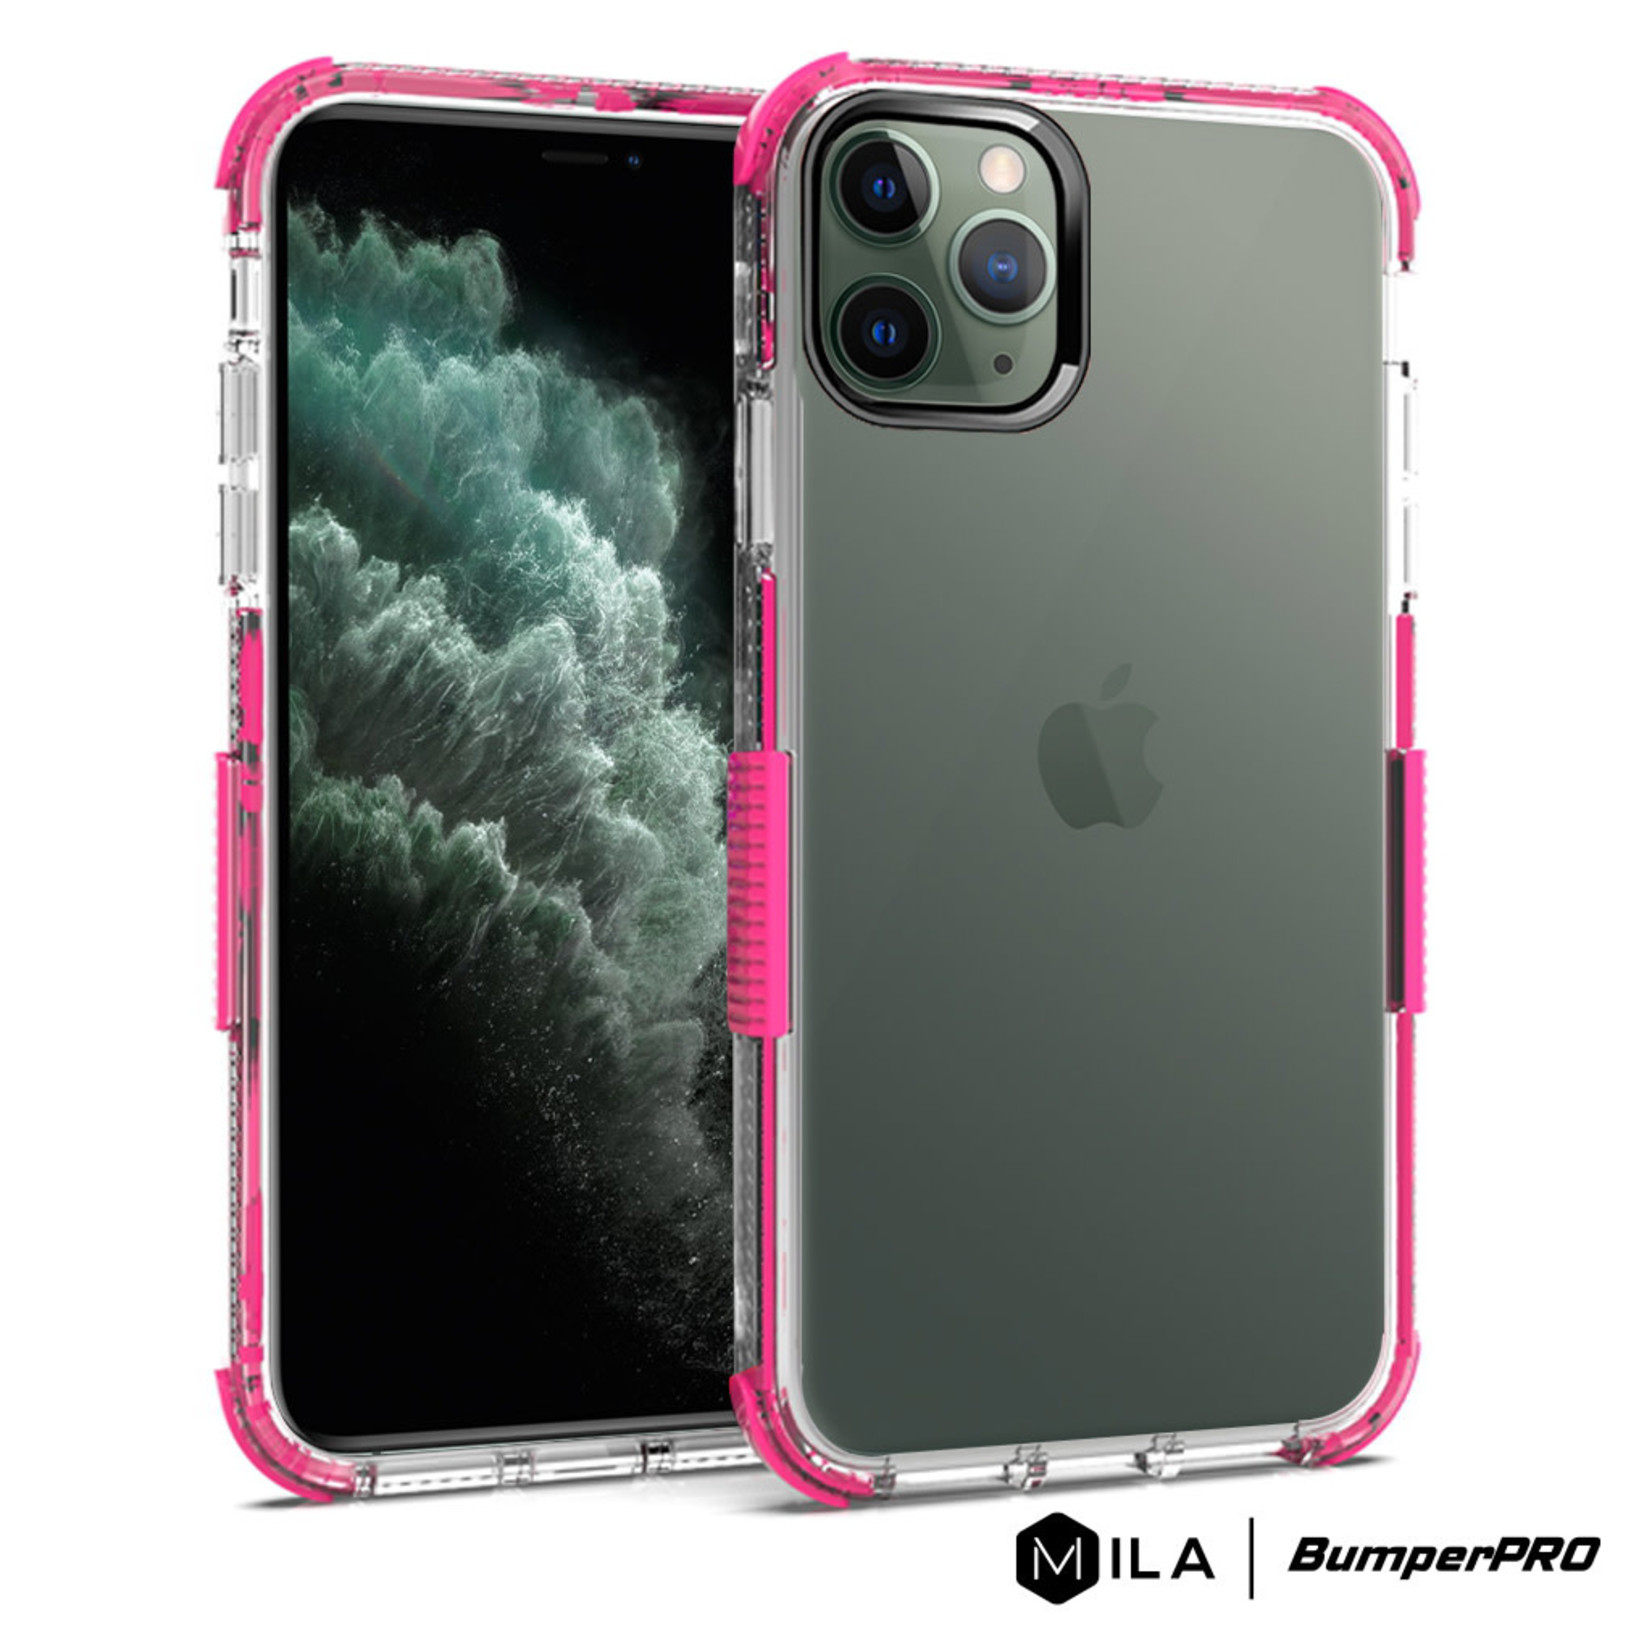 MILA | BumperPRO Case for iPhone 11 Pro